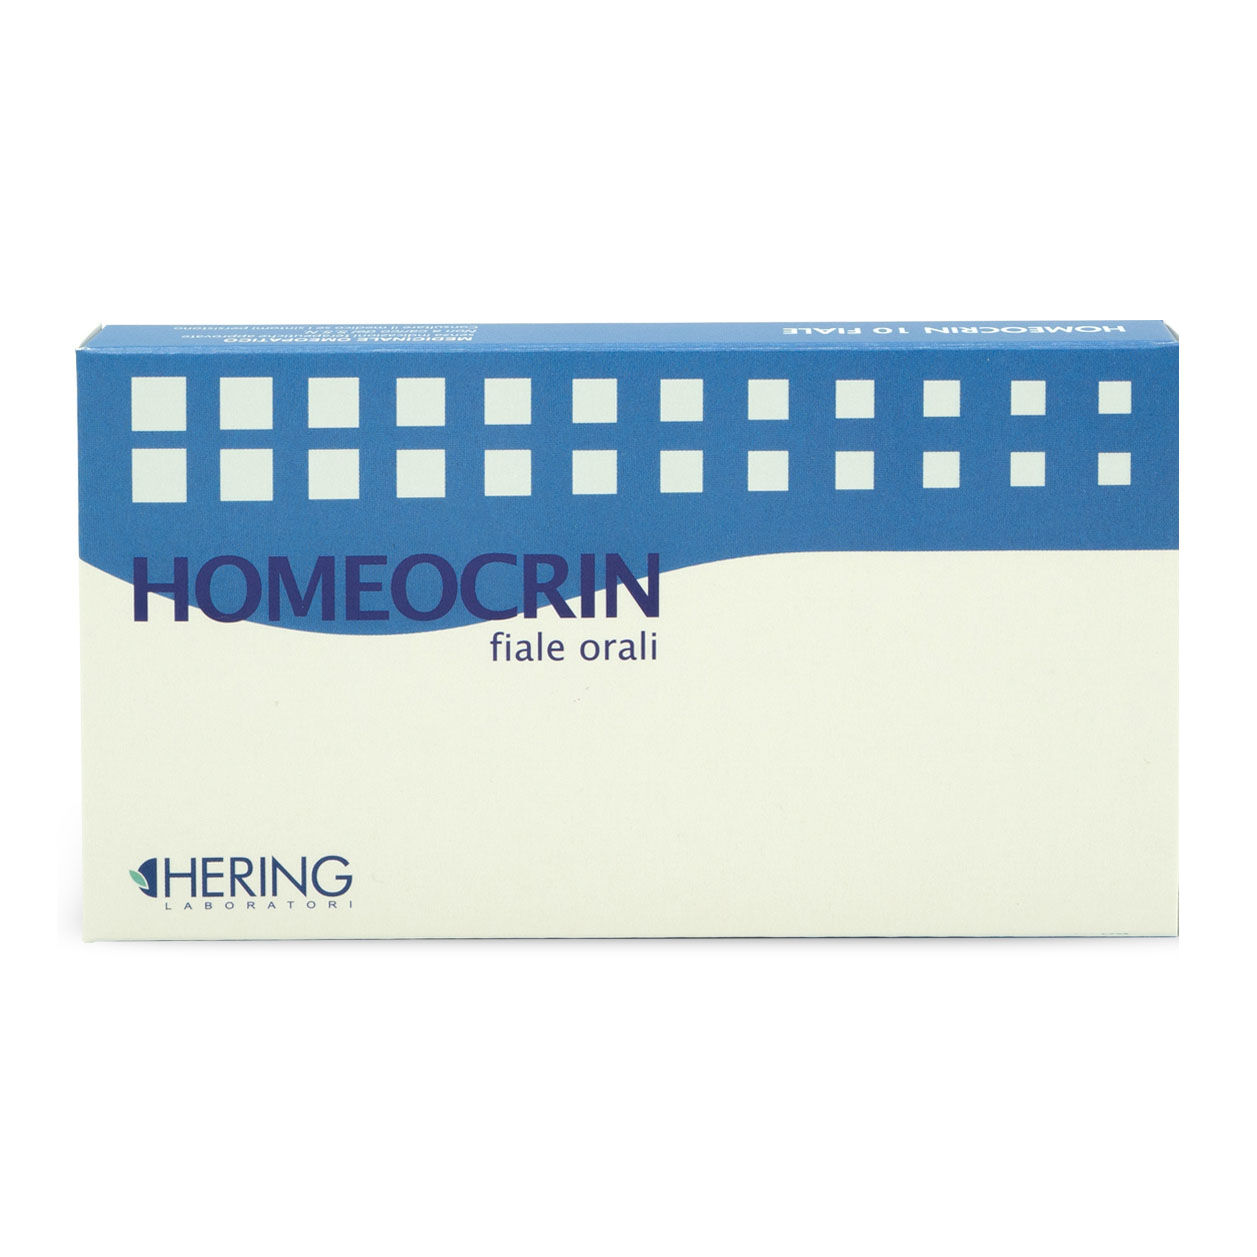 hering Homeocynthis homeocrin 12 10f